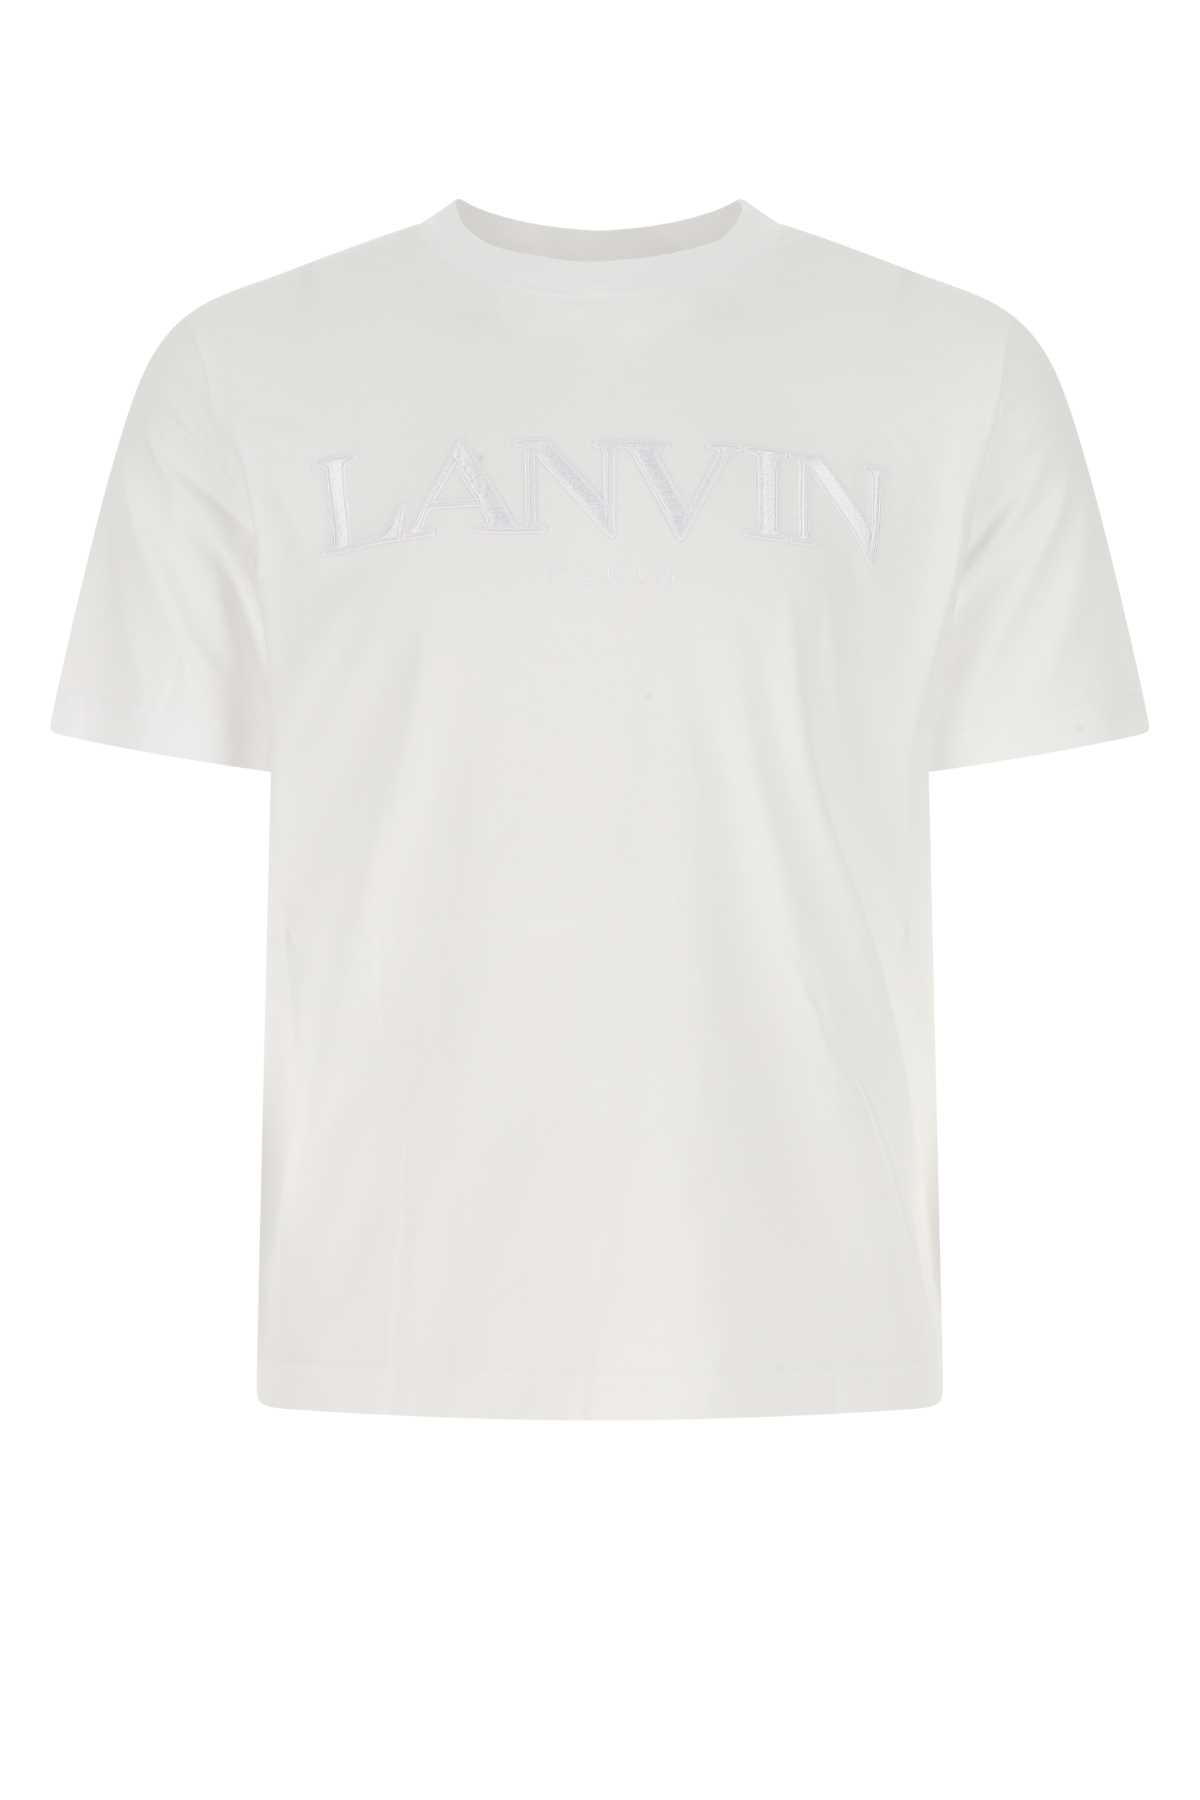 Lanvin White Cotton T-shirt In Opticwhite